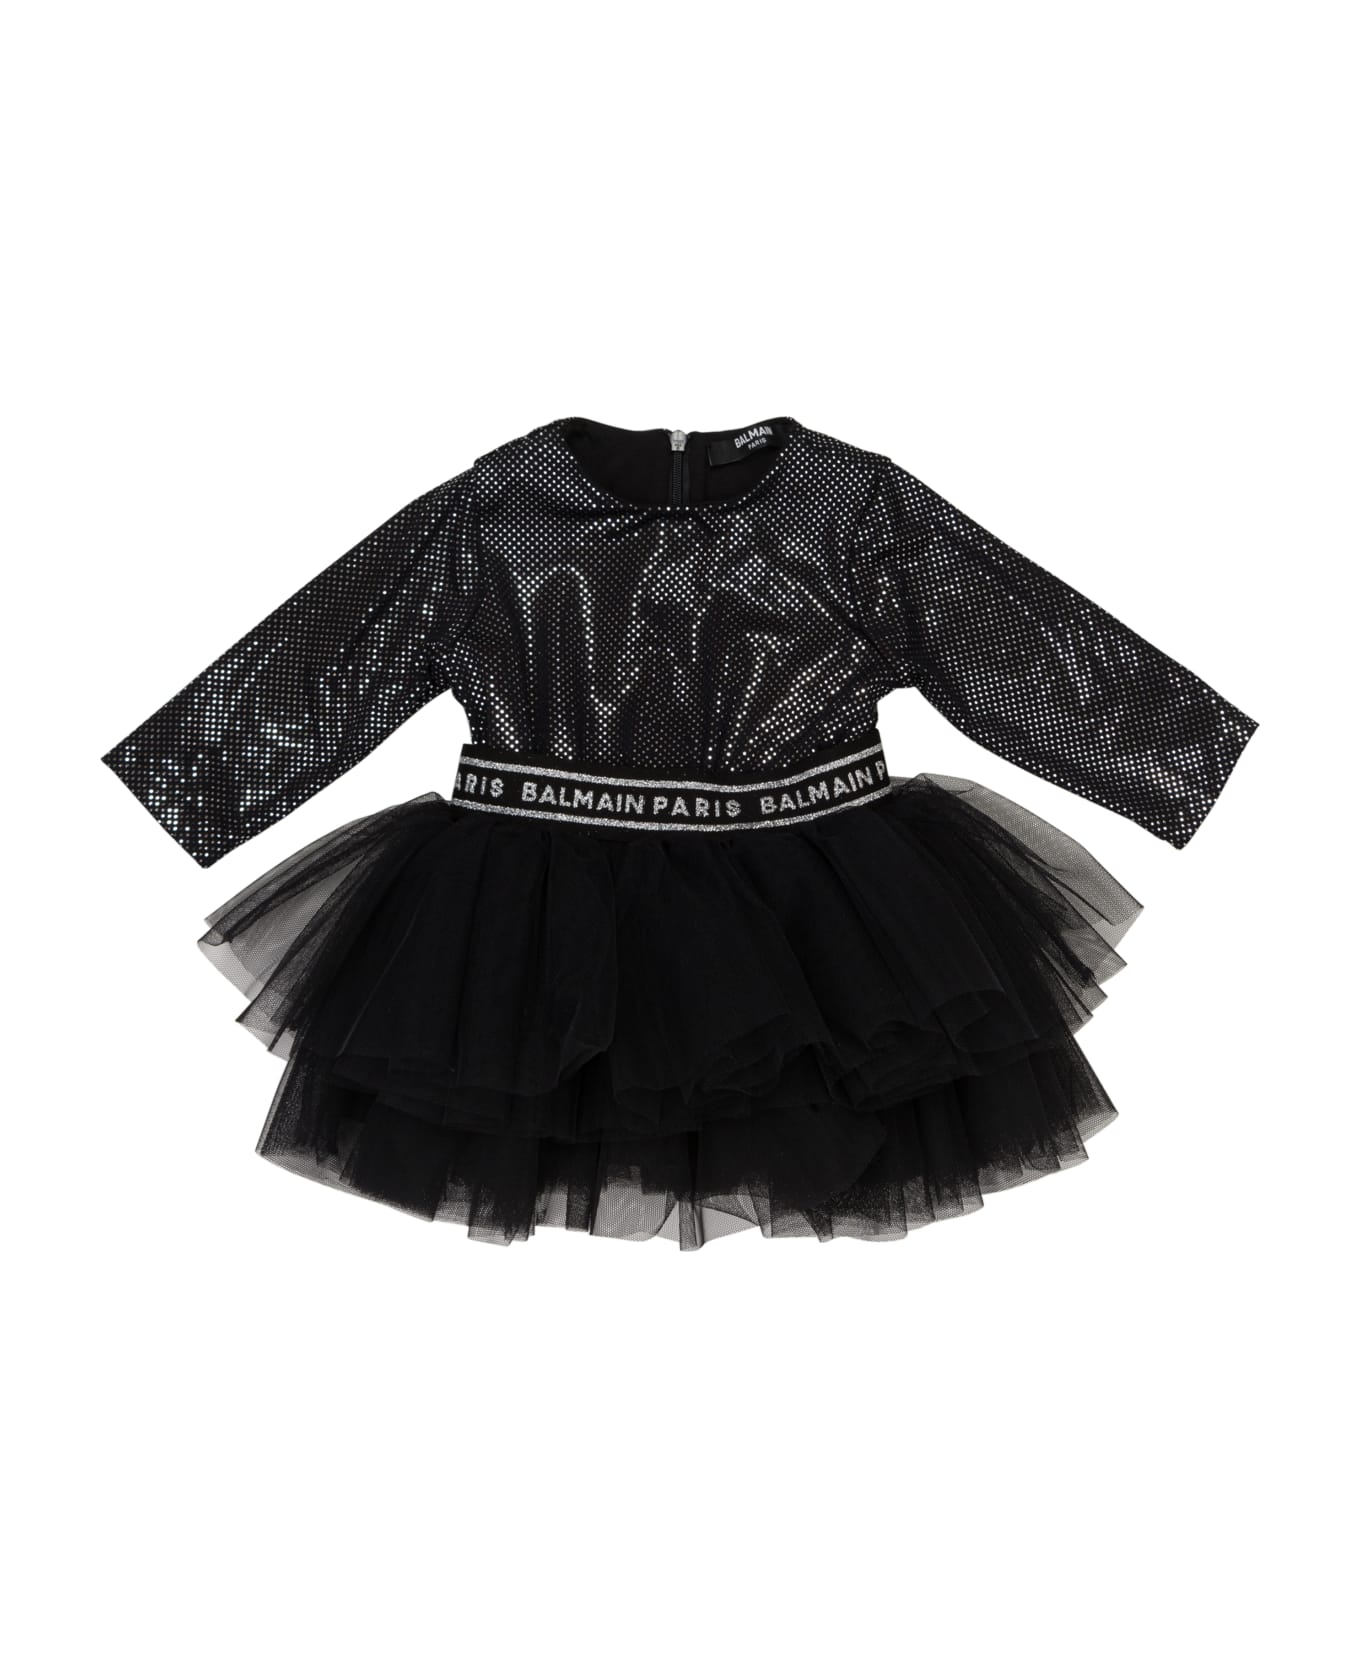 Balmain Sequined Mini Skirt - Black/silver